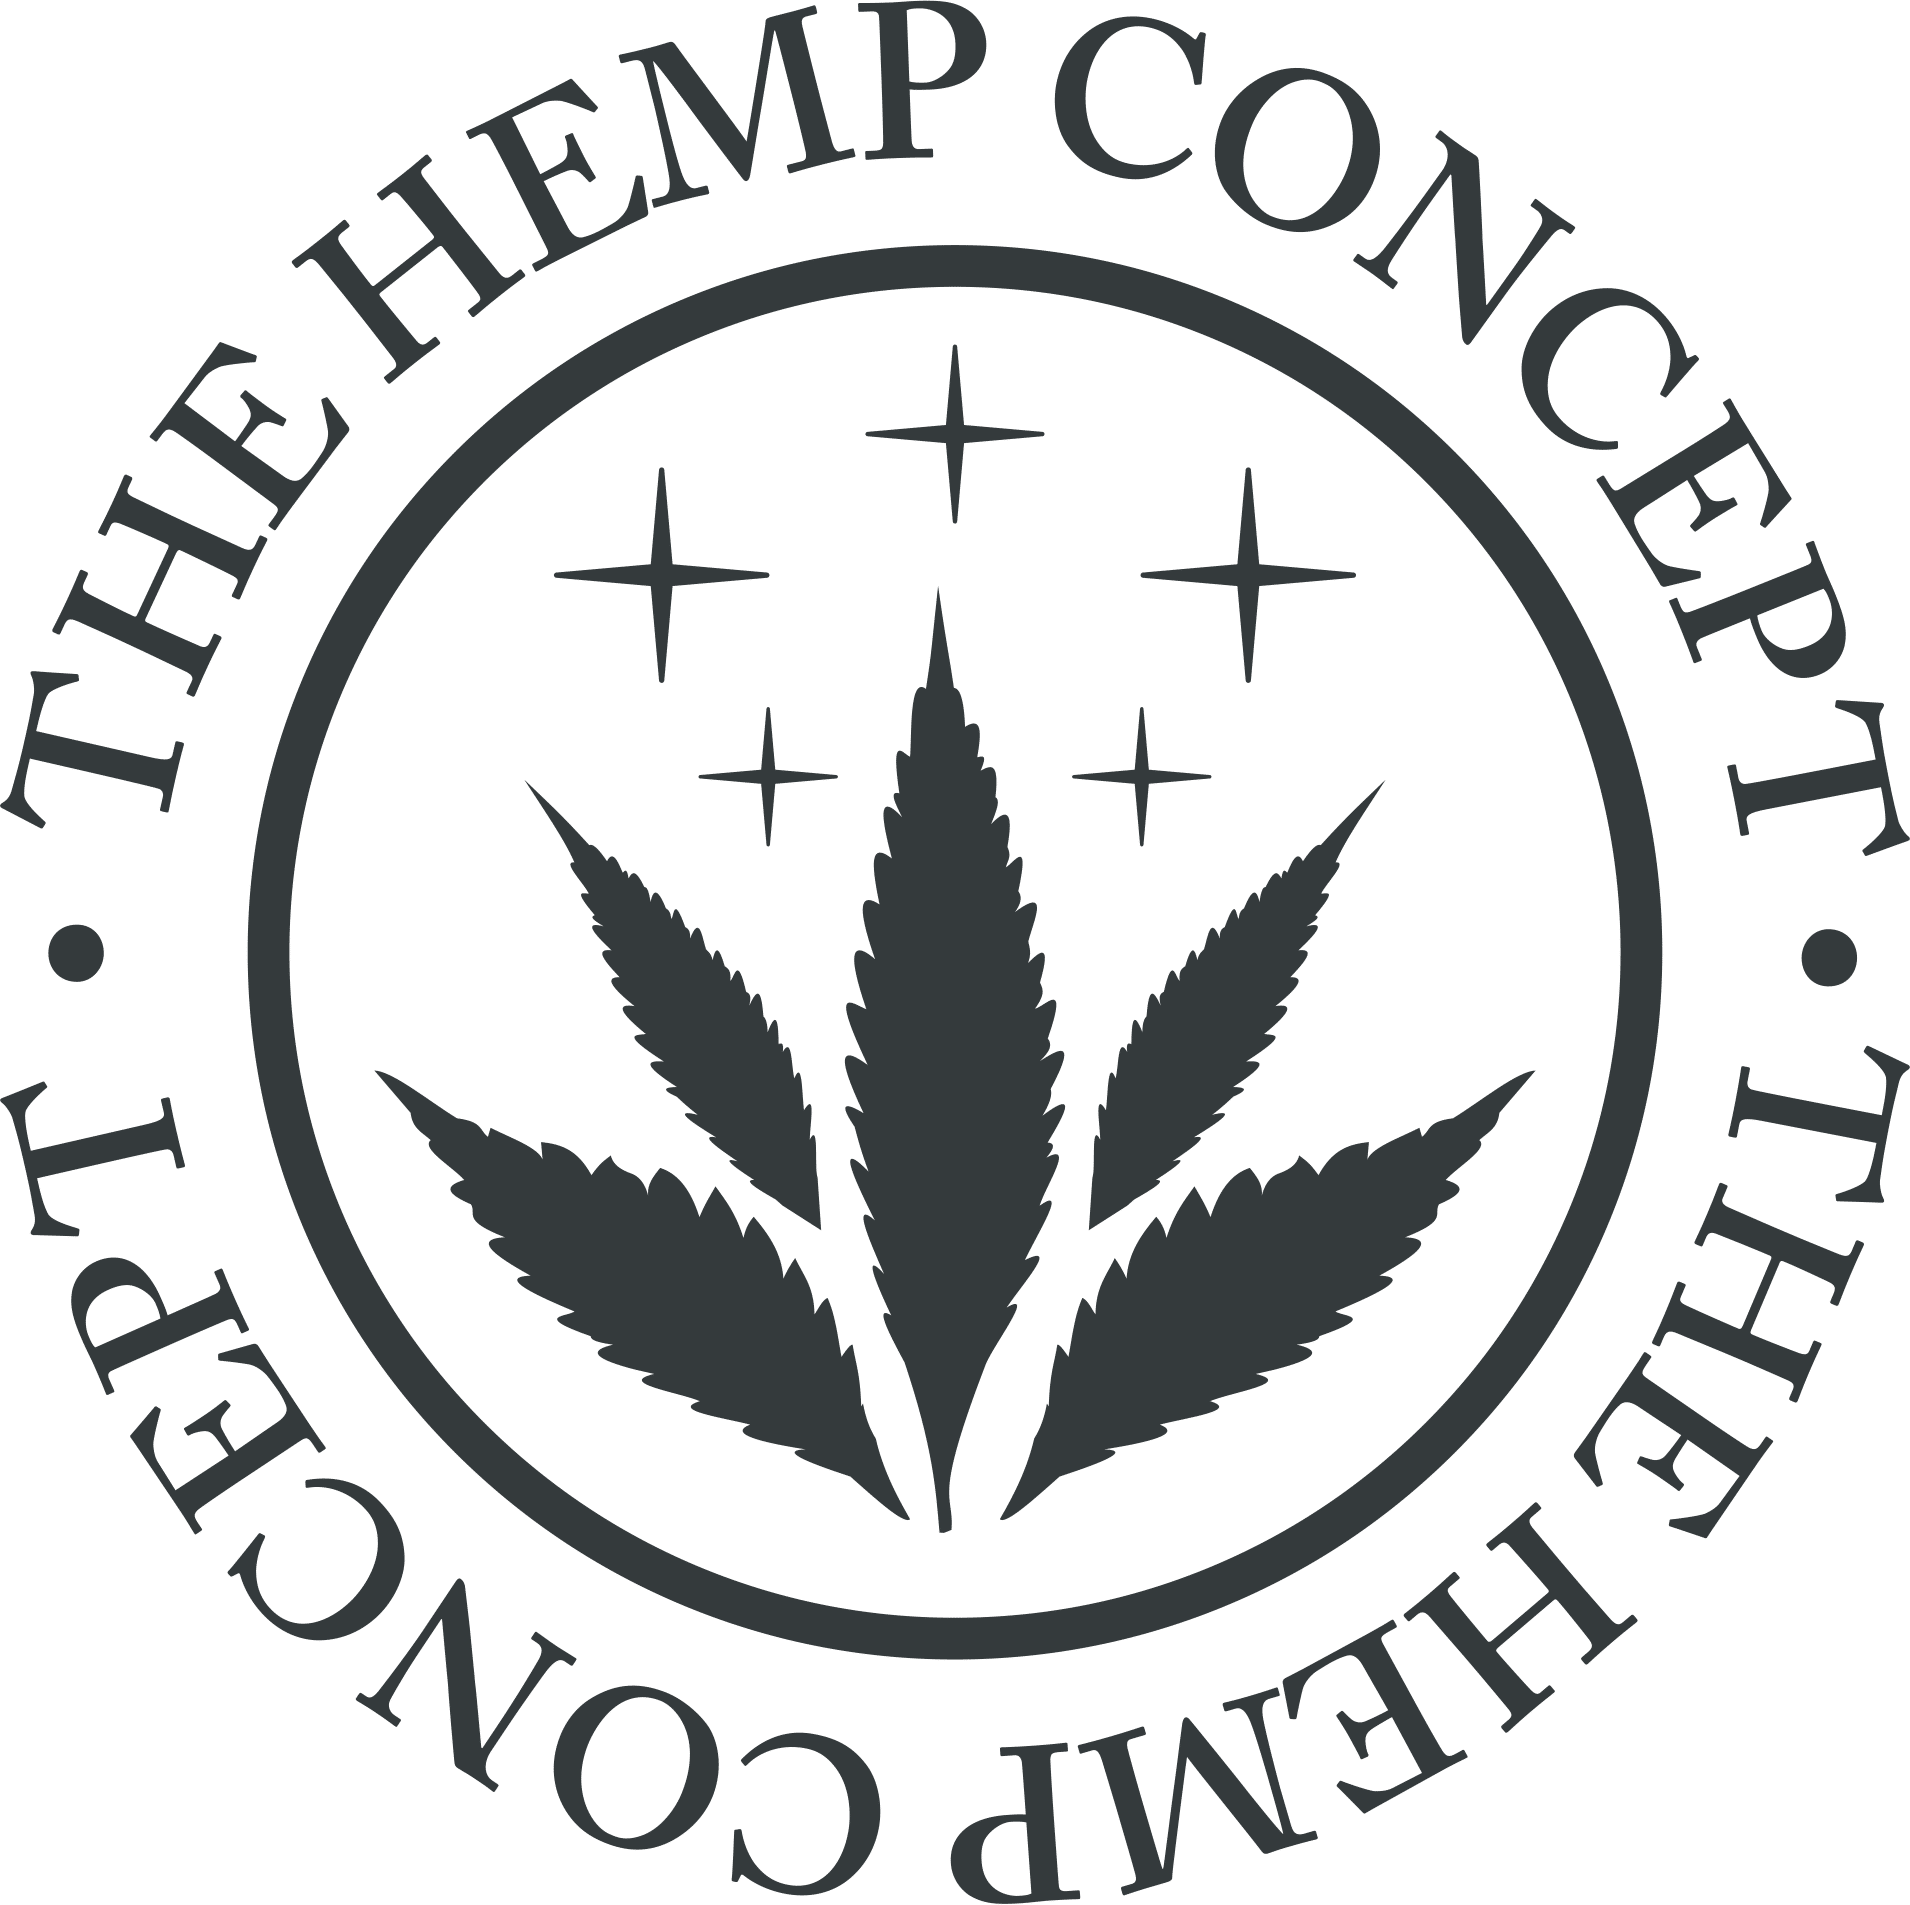 The hemp concept